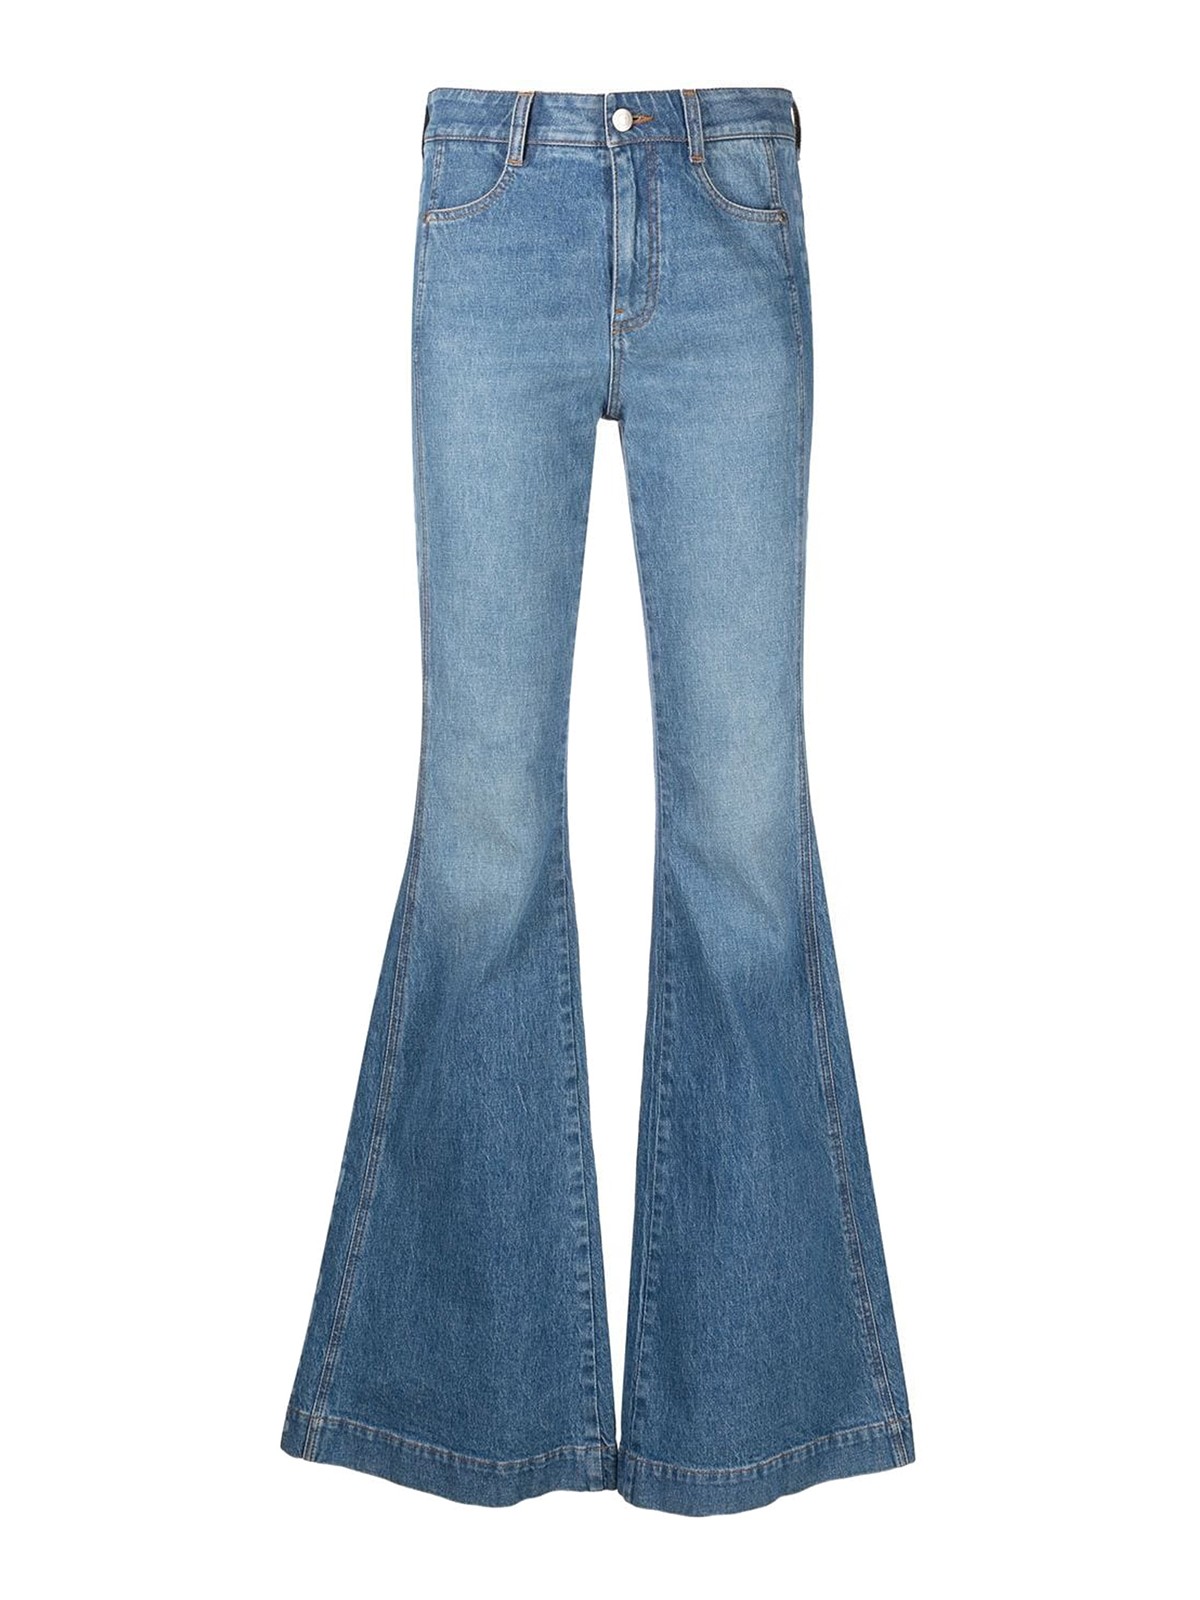 Stella Mccartney Denim Jeans In Medium Wash